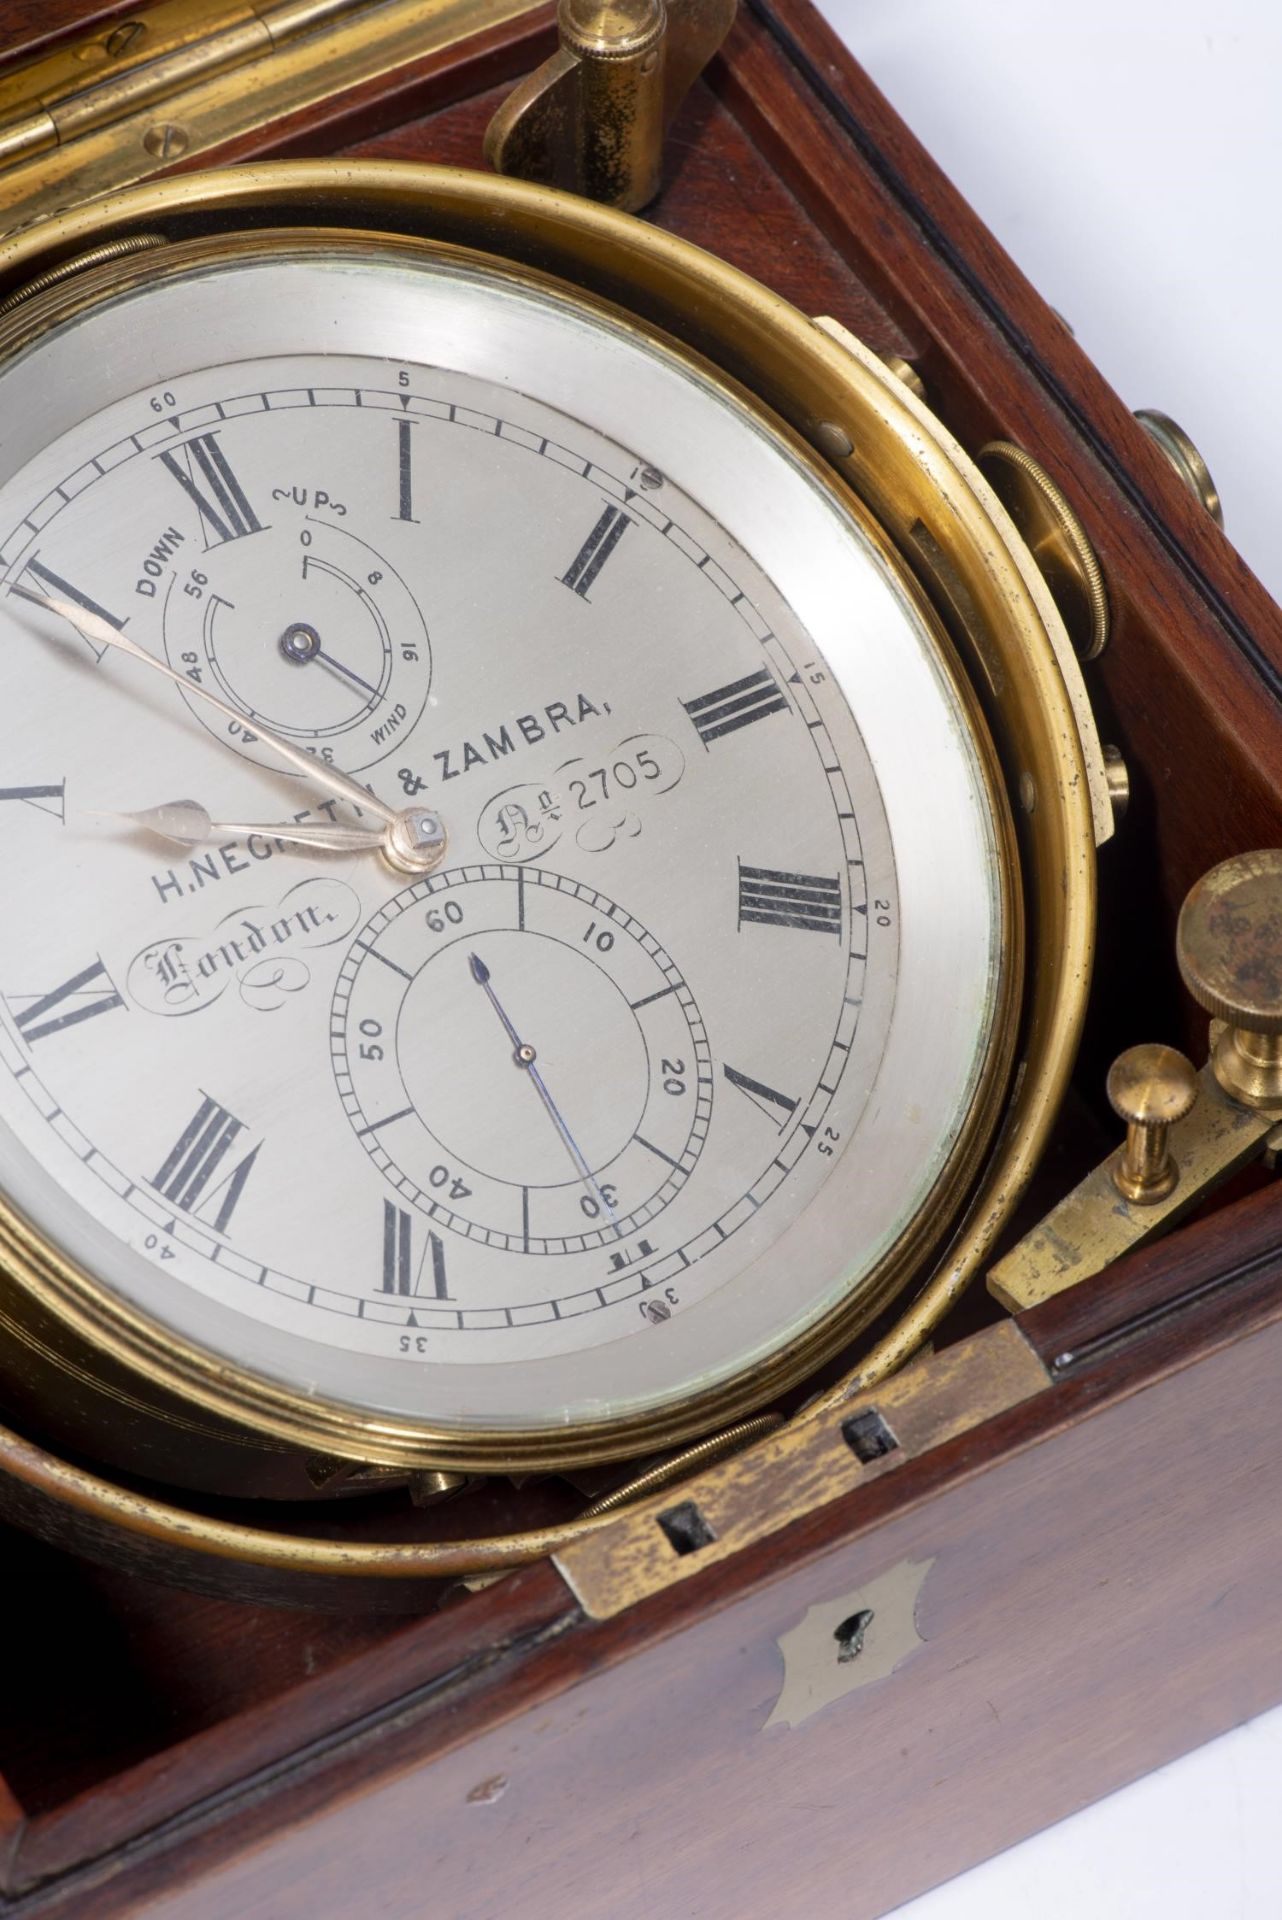 Negretti & Zambra London, chronomètre de marine de 8 jours, n°2705, vers 1900. [...] - Bild 3 aus 4